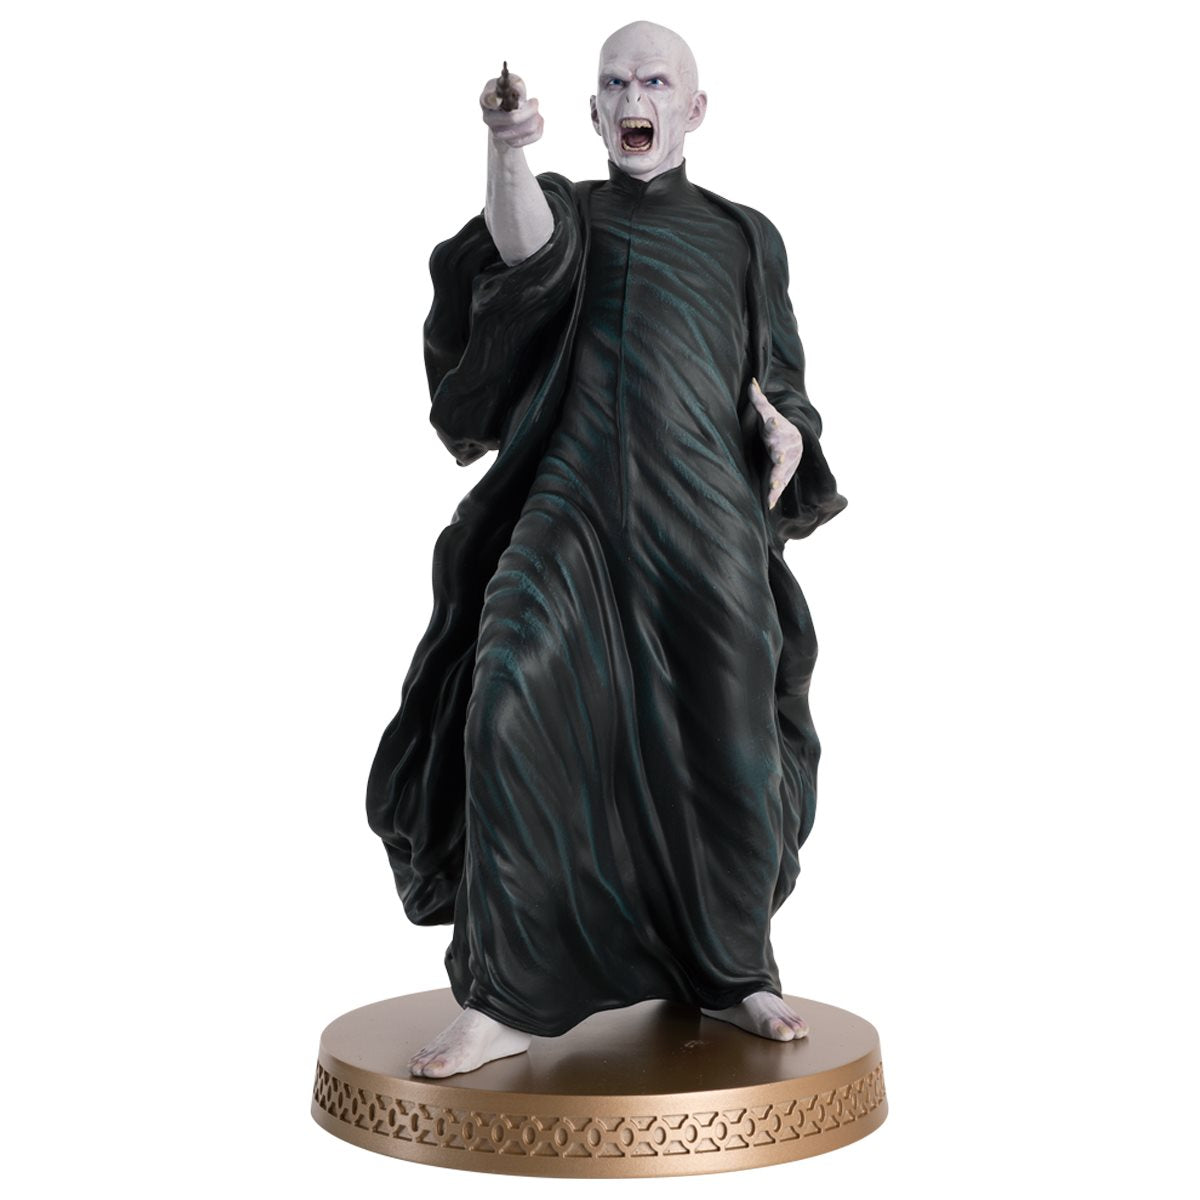 Wizarding World 2: Lord Voldemort